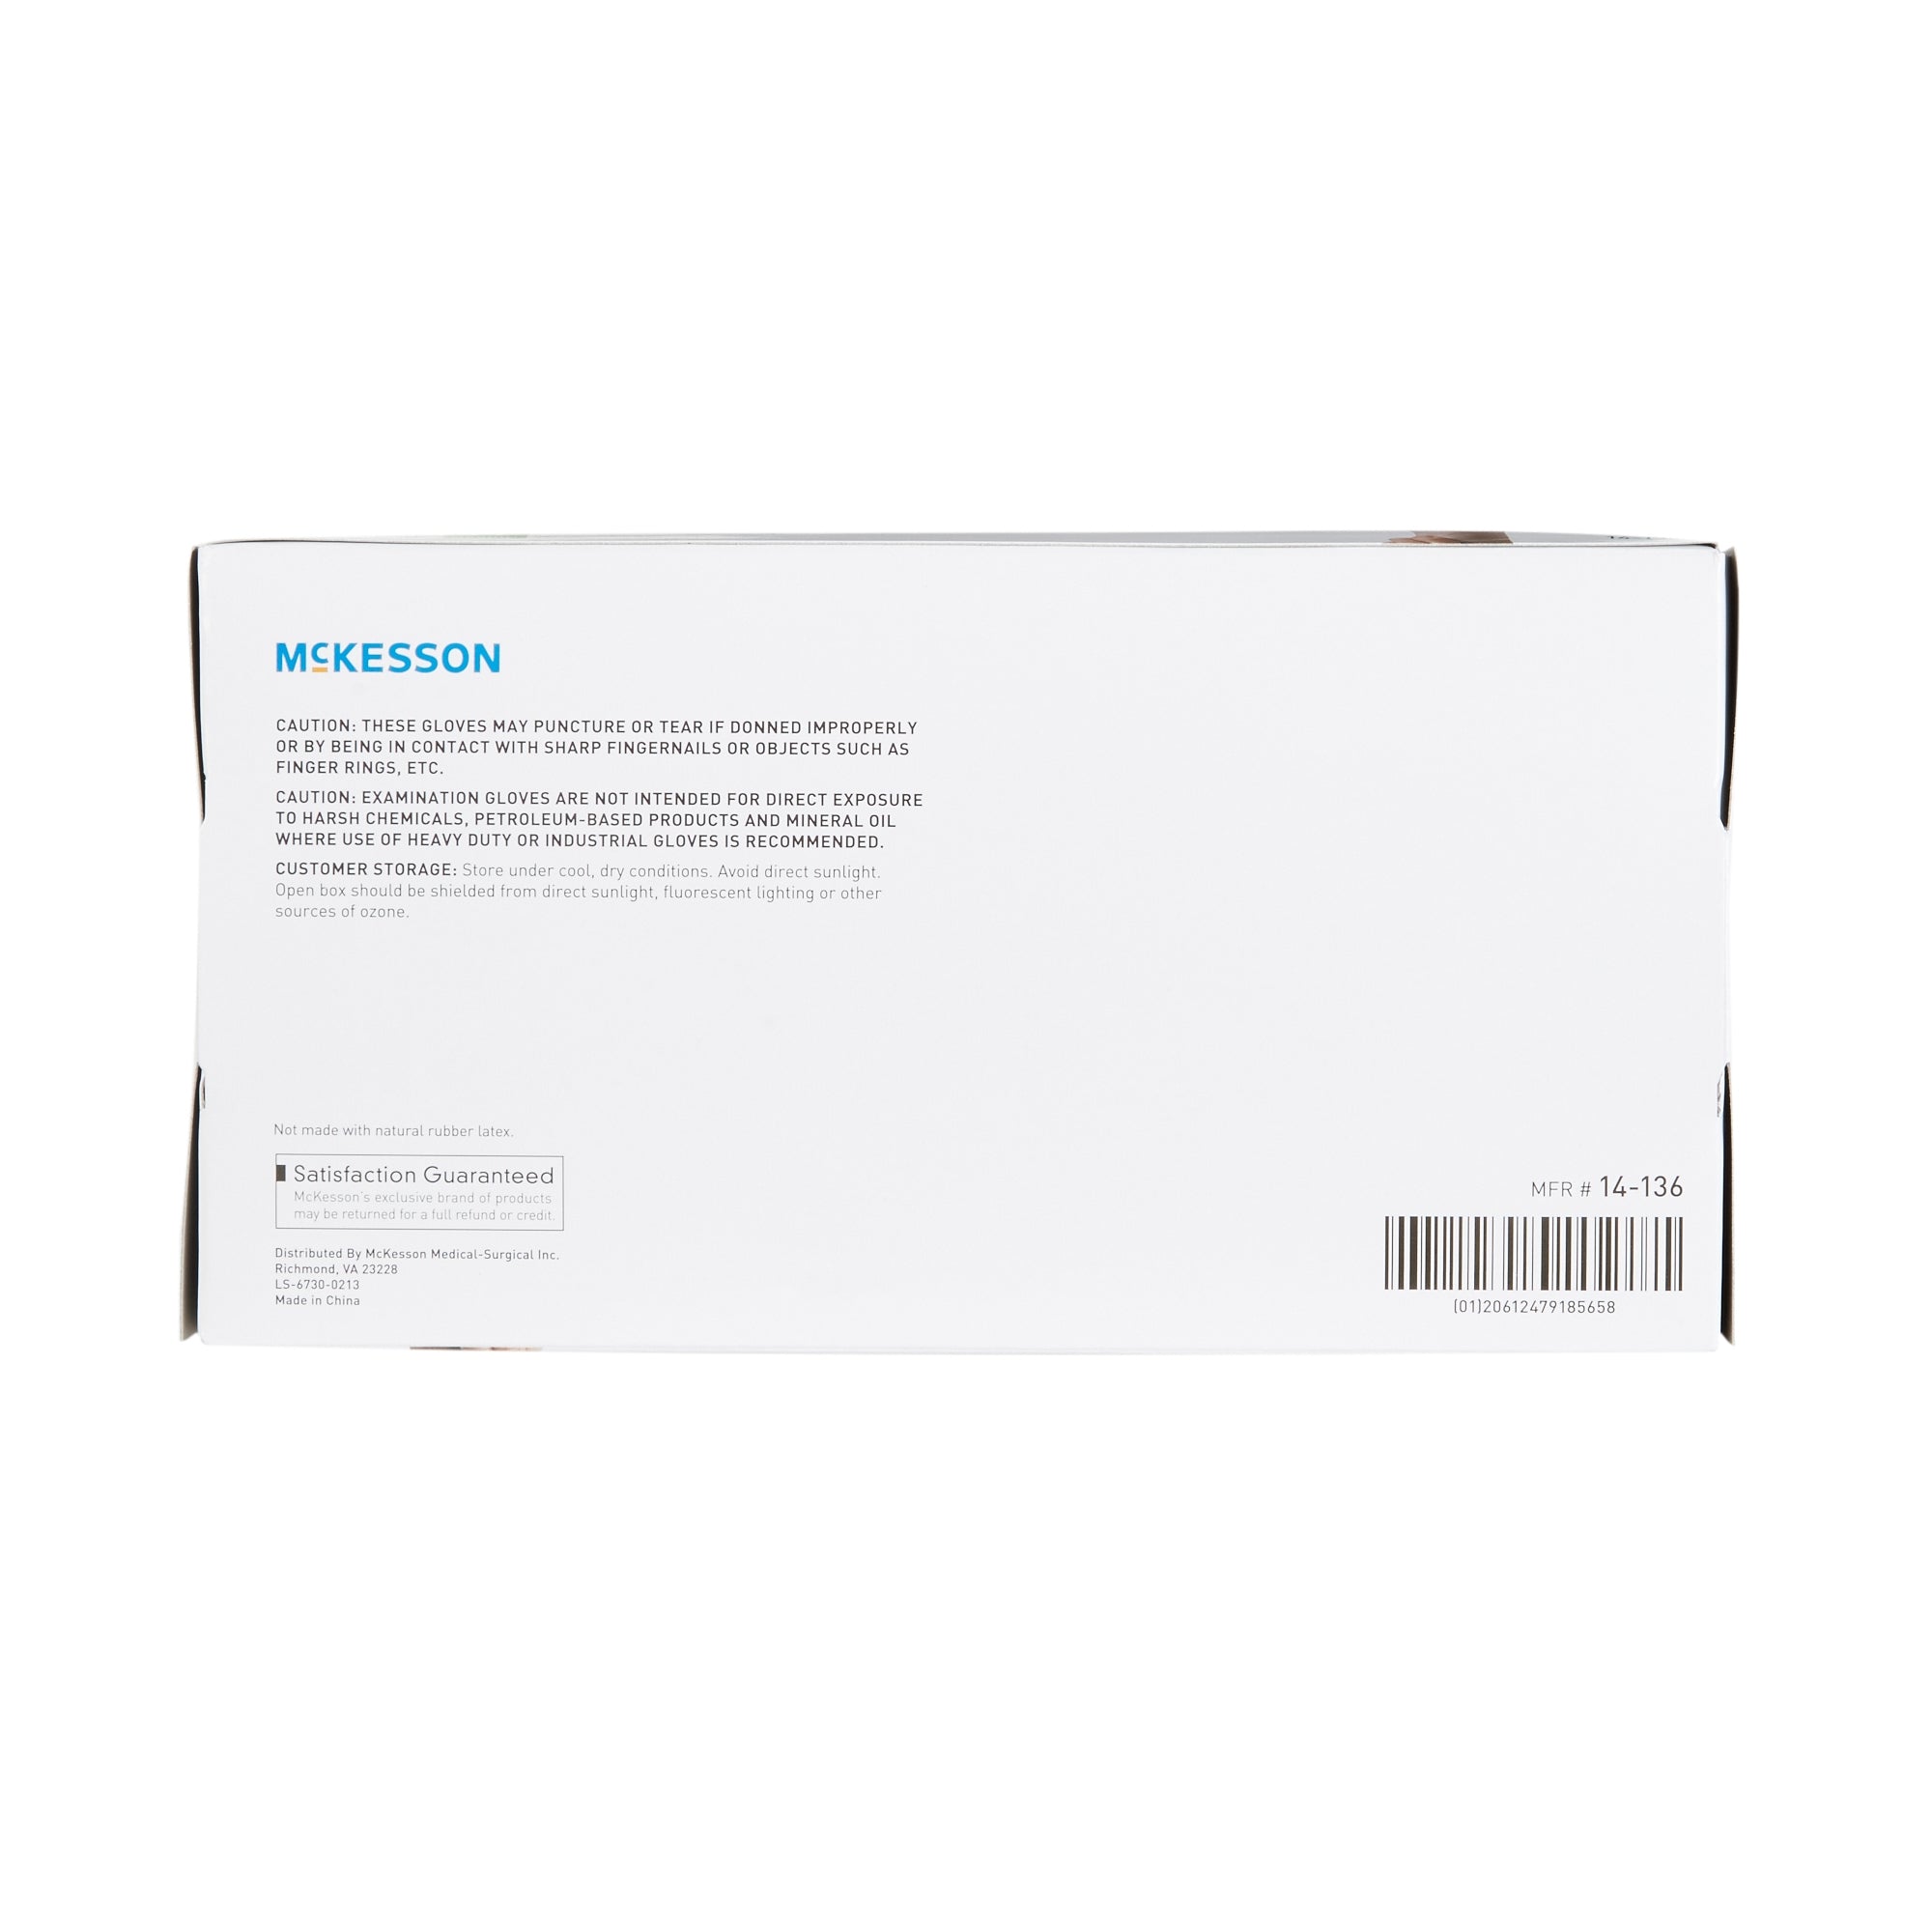 McKesson Vinyl Exam Gloves, Medium, Clear - 150 Pack for Medical Use